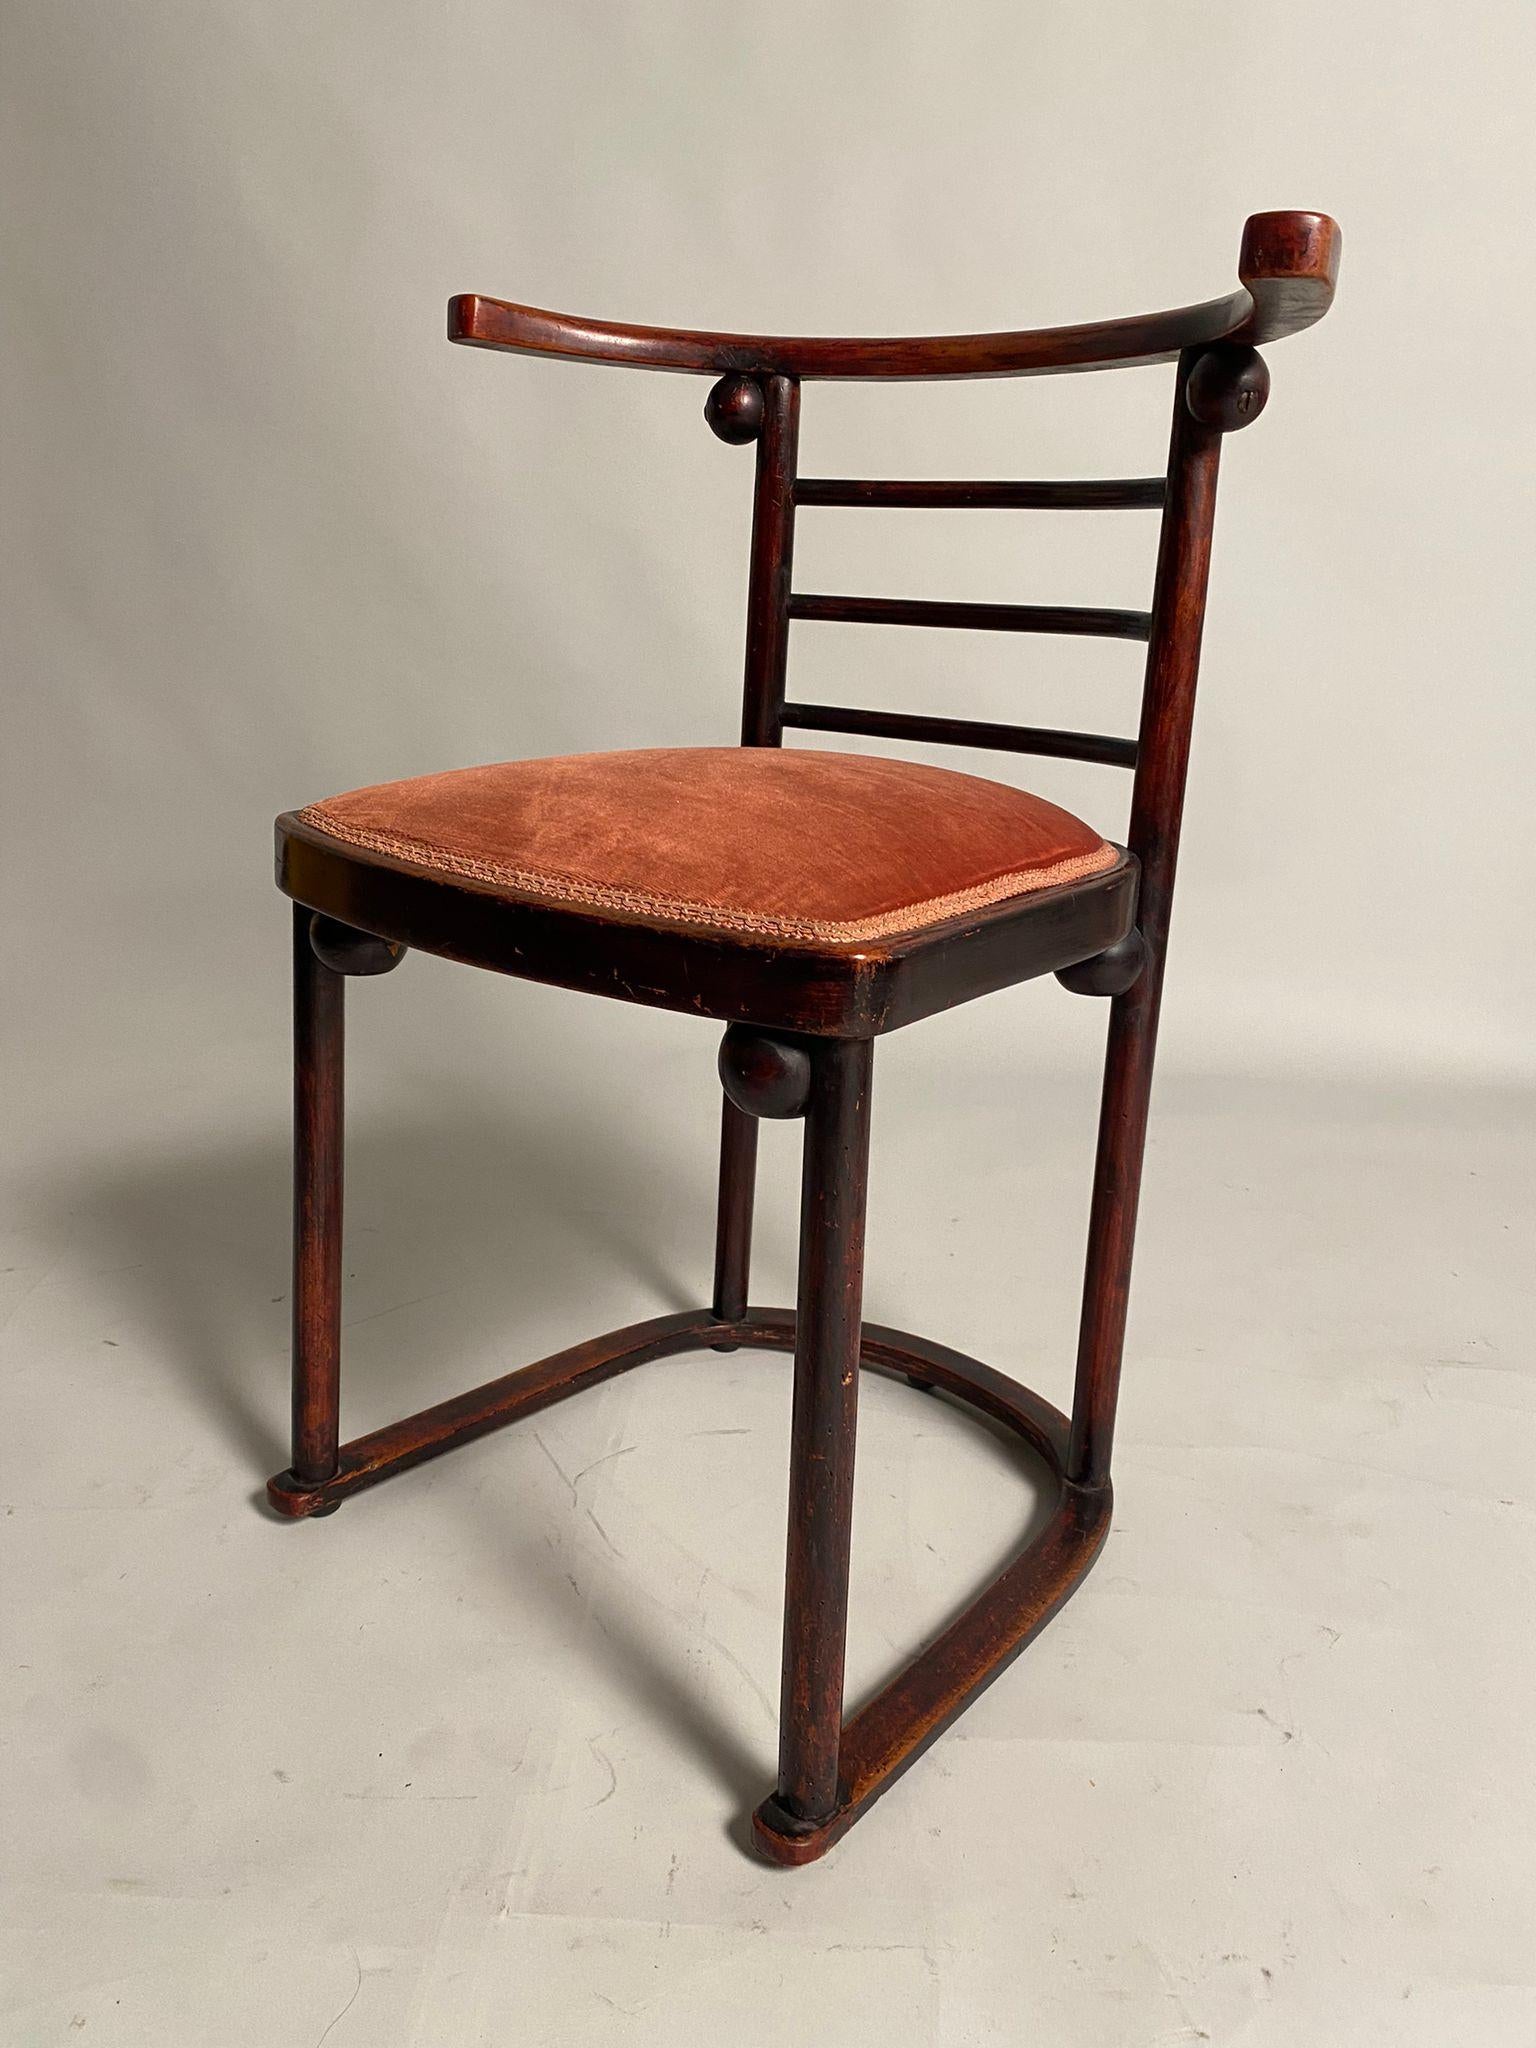 Bentwood Josef Hoffmann, Pair of Fledermaus Chairs for J.J. Kohn, Austria, 1905